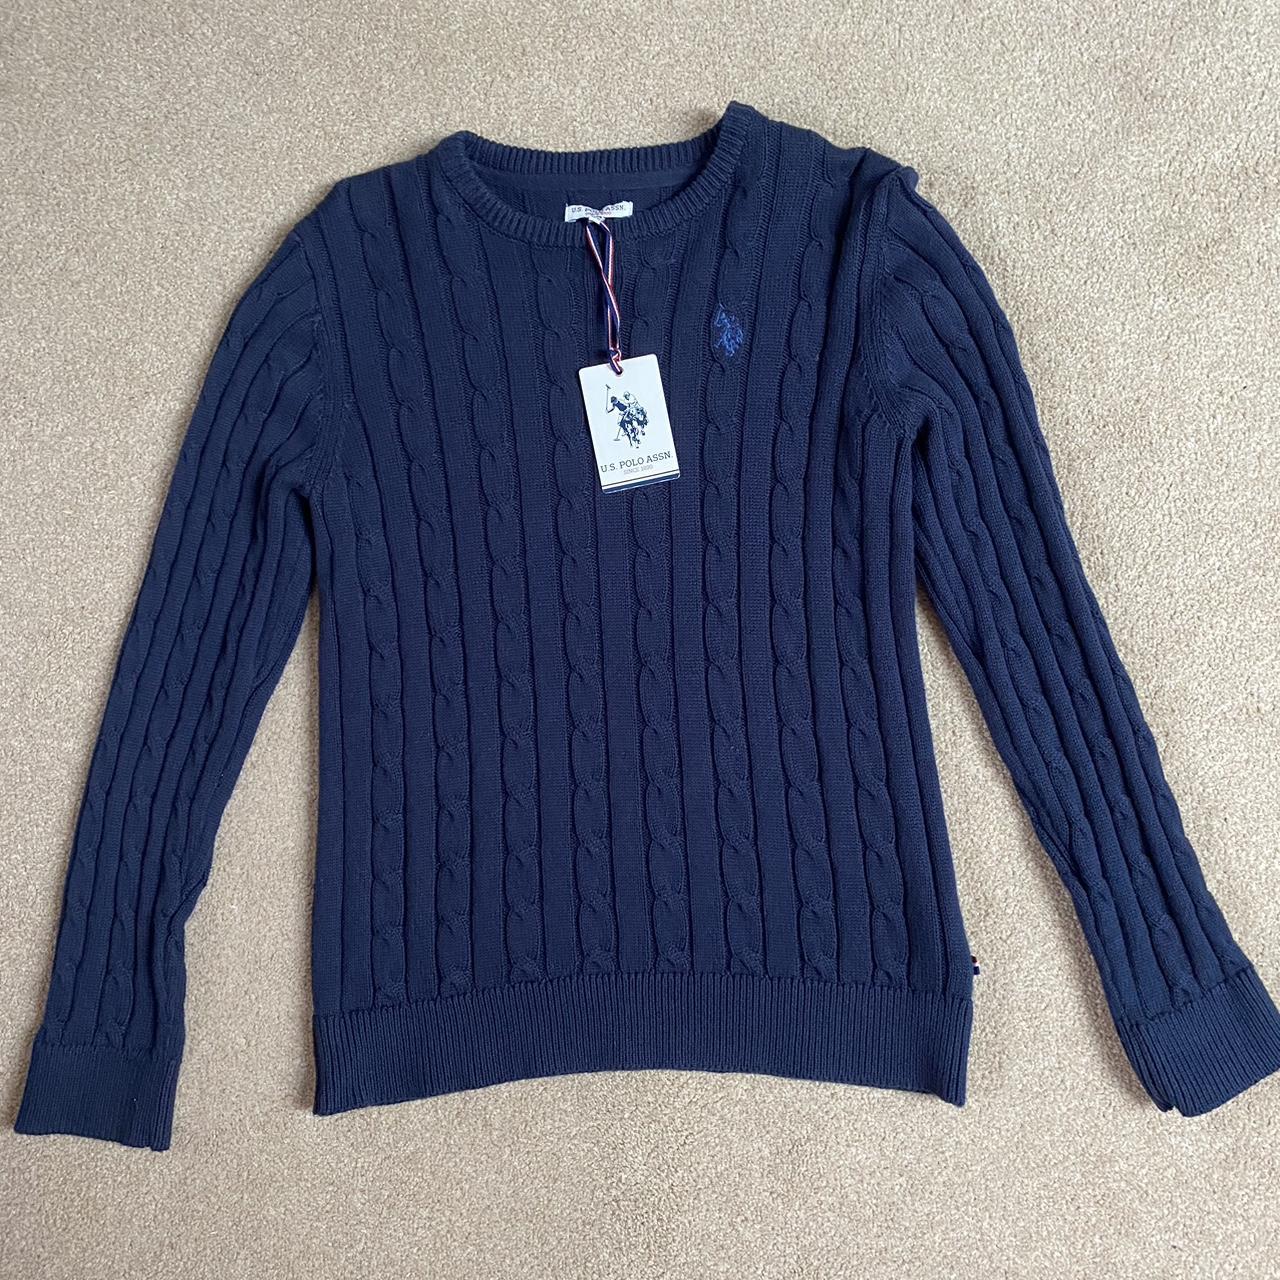 Polo Assn cable knit jumper Colour: navy Size:... - Depop